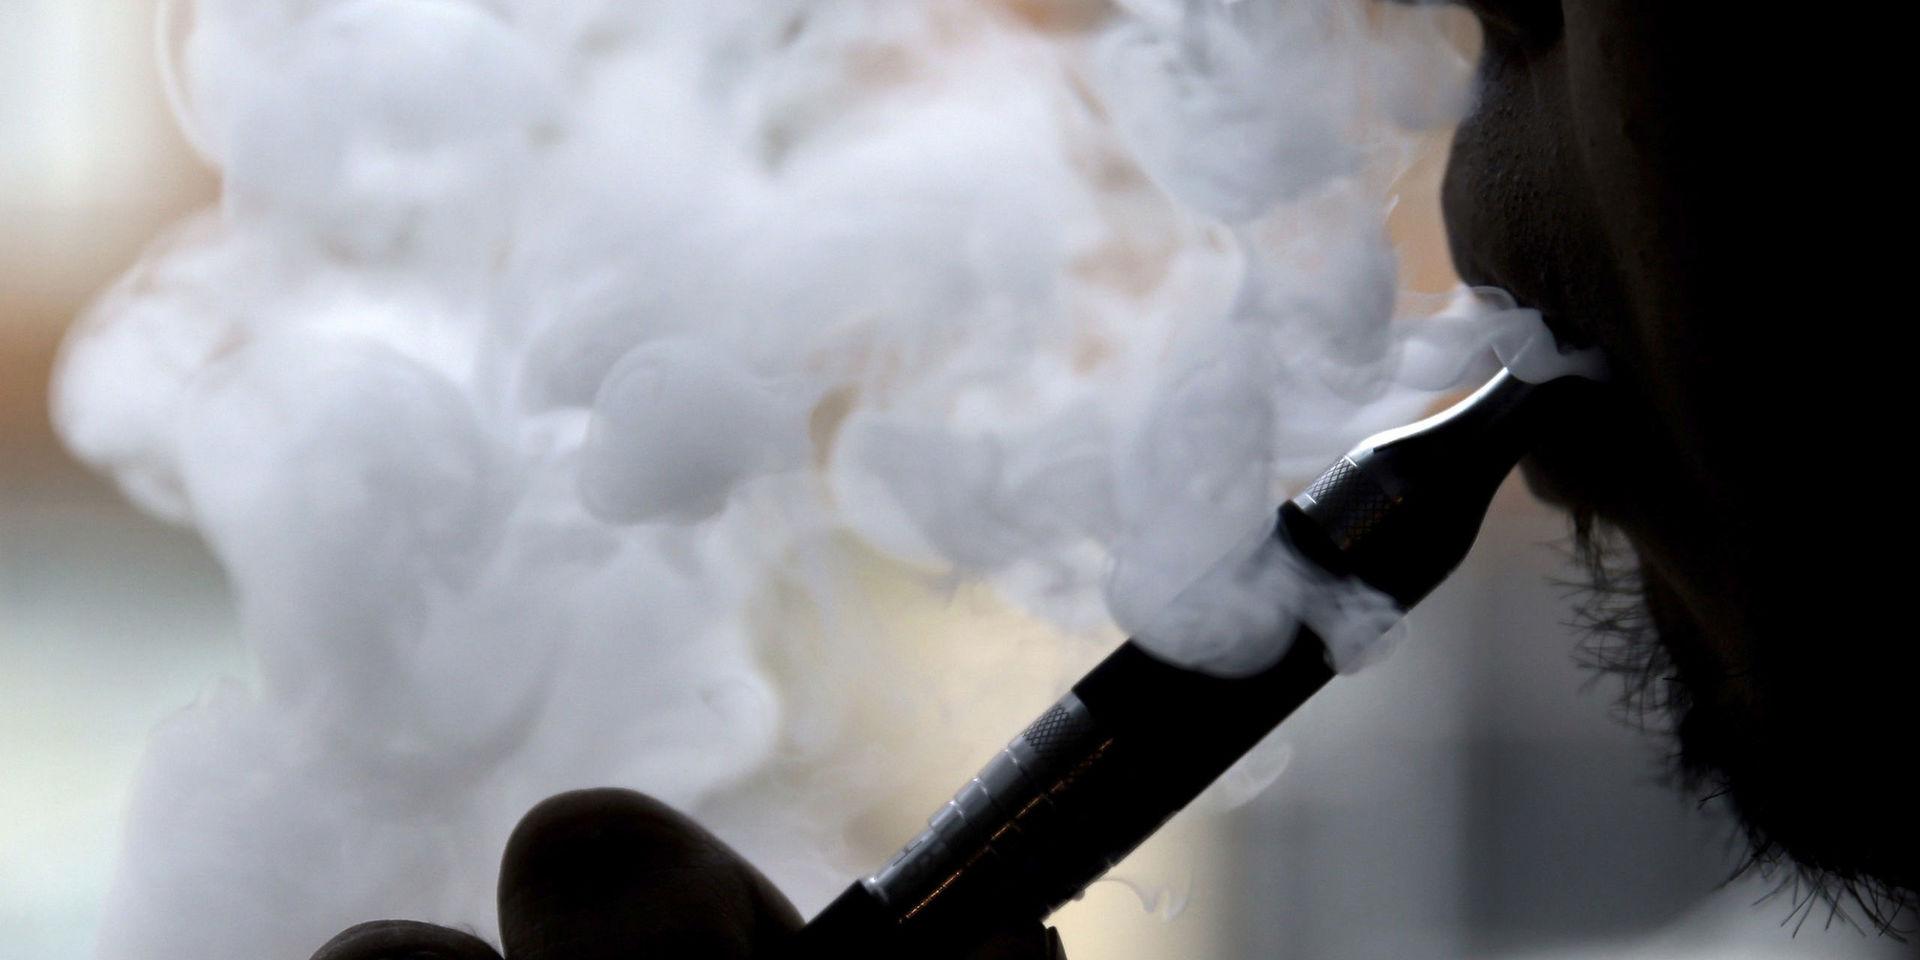 Vitamin E-acetat kan ligga bakom de skador som drabbat rökare av e-cigaretter. Arkivbild